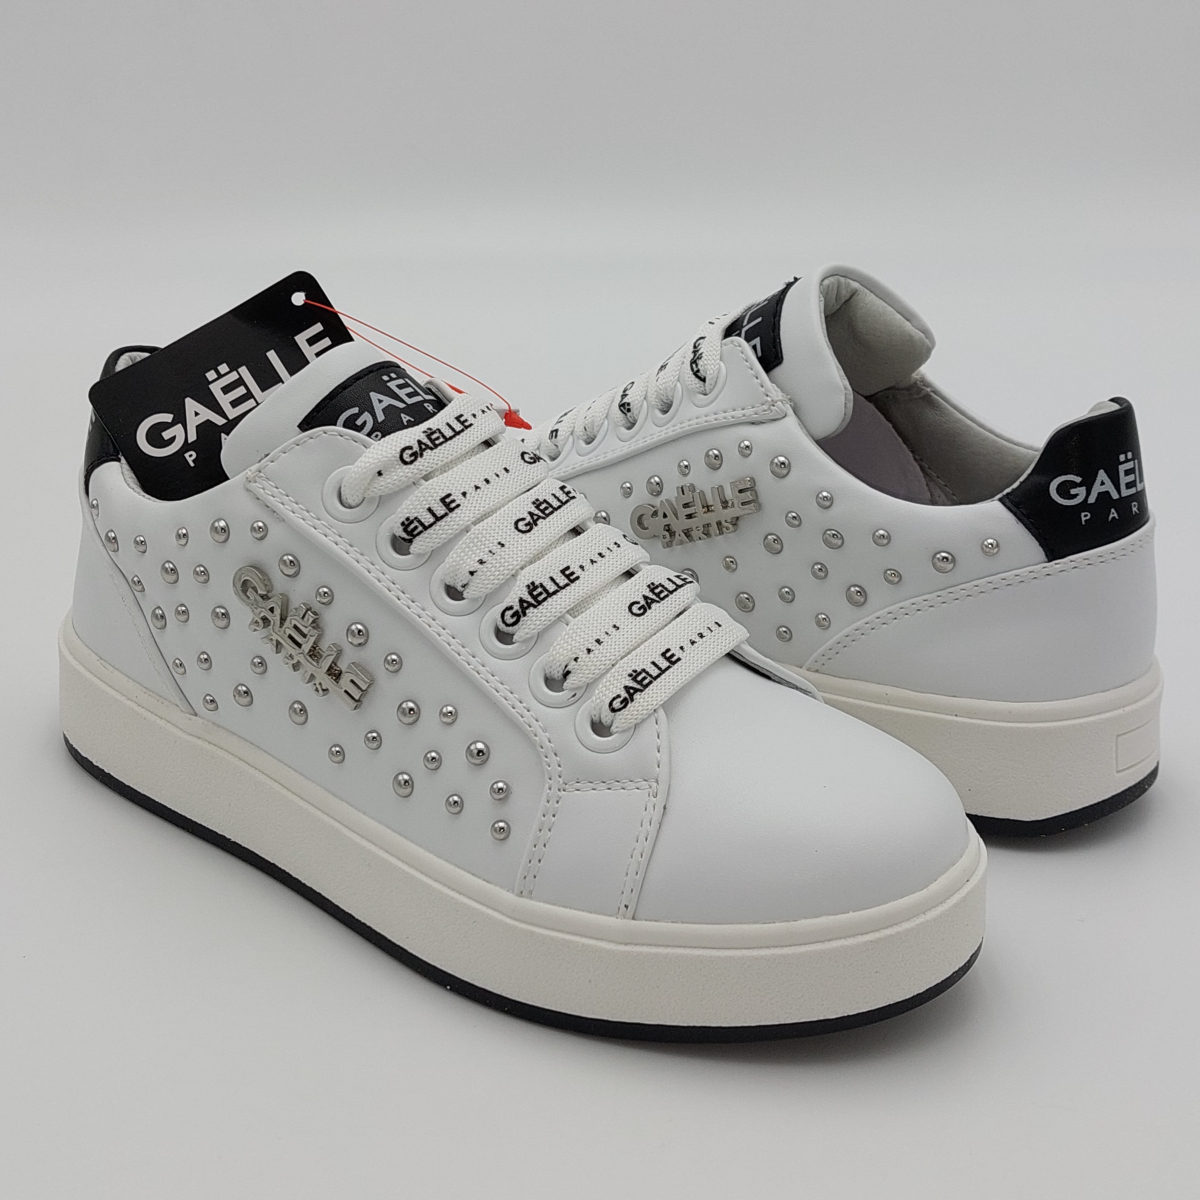 Gaelle Paris -Sneaker lacci...